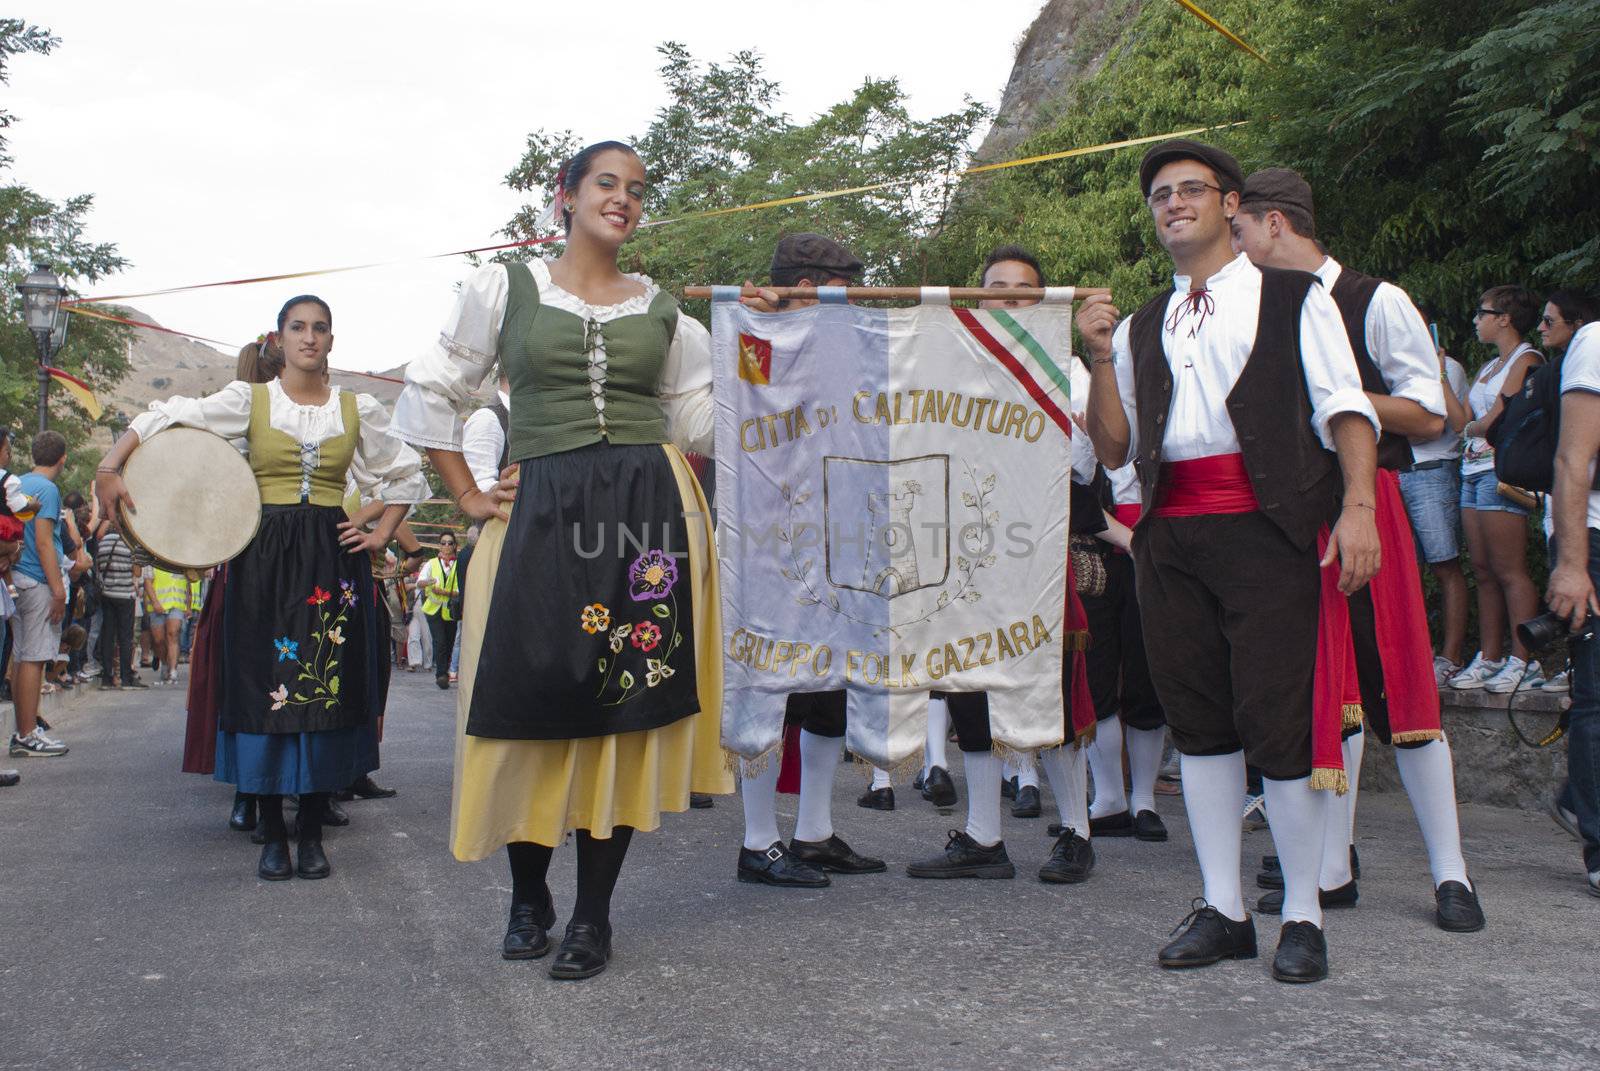 Folk group from sicily by gandolfocannatella